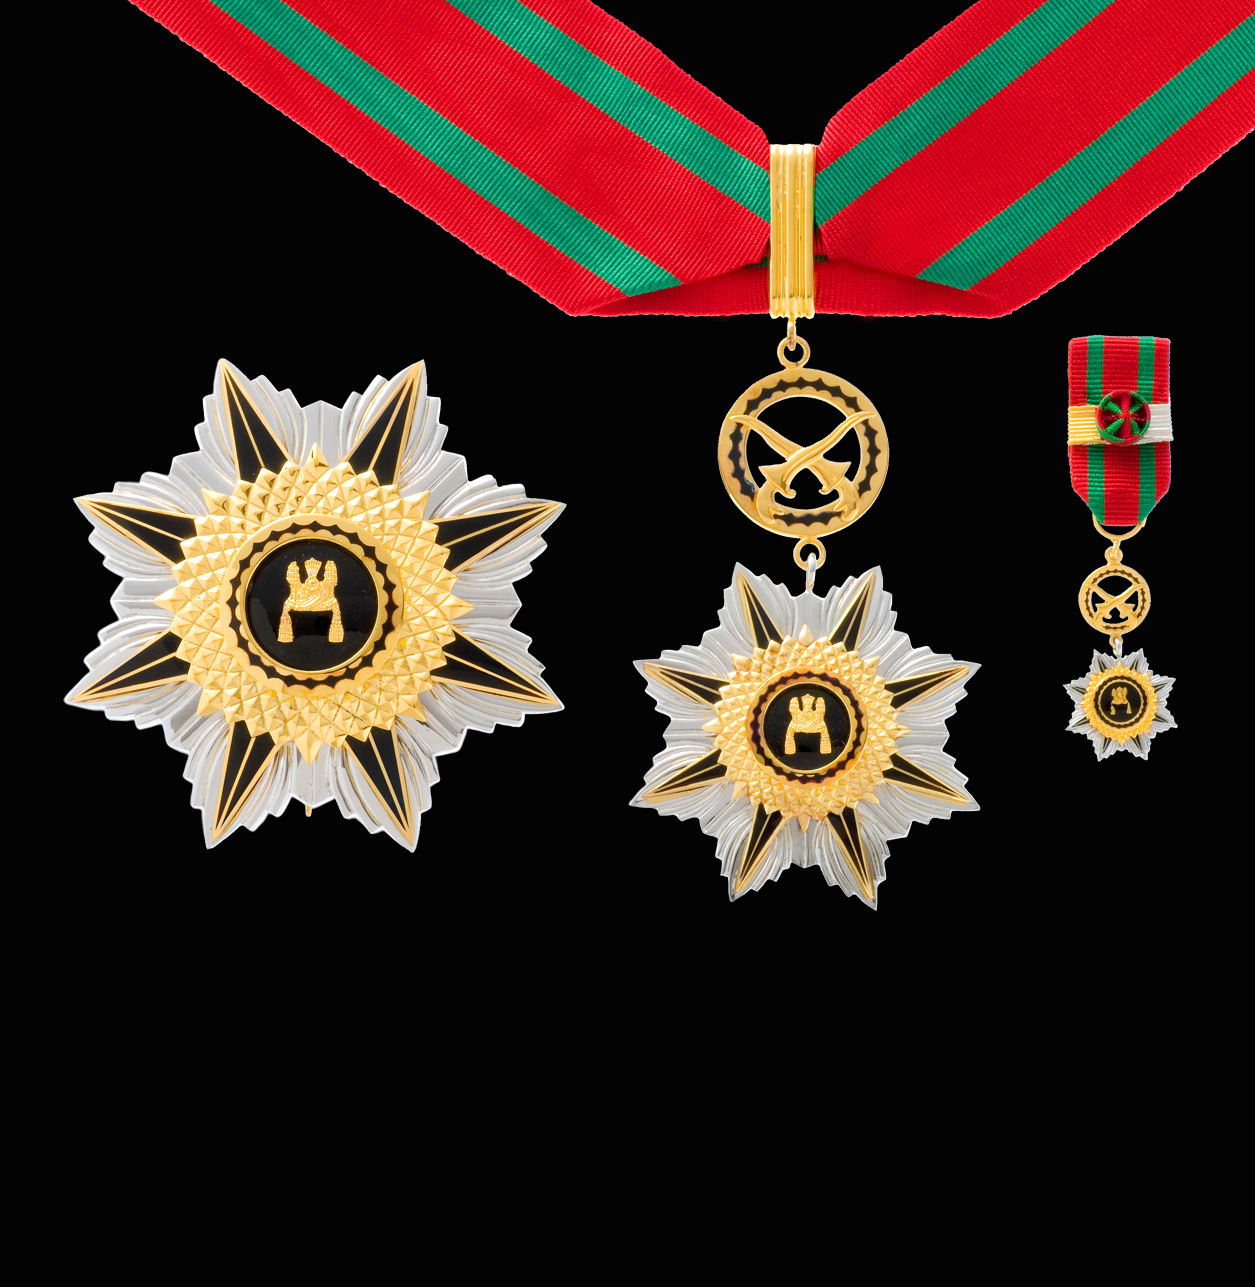 The Most Gallant Order of Pahlawan Negara Brunei